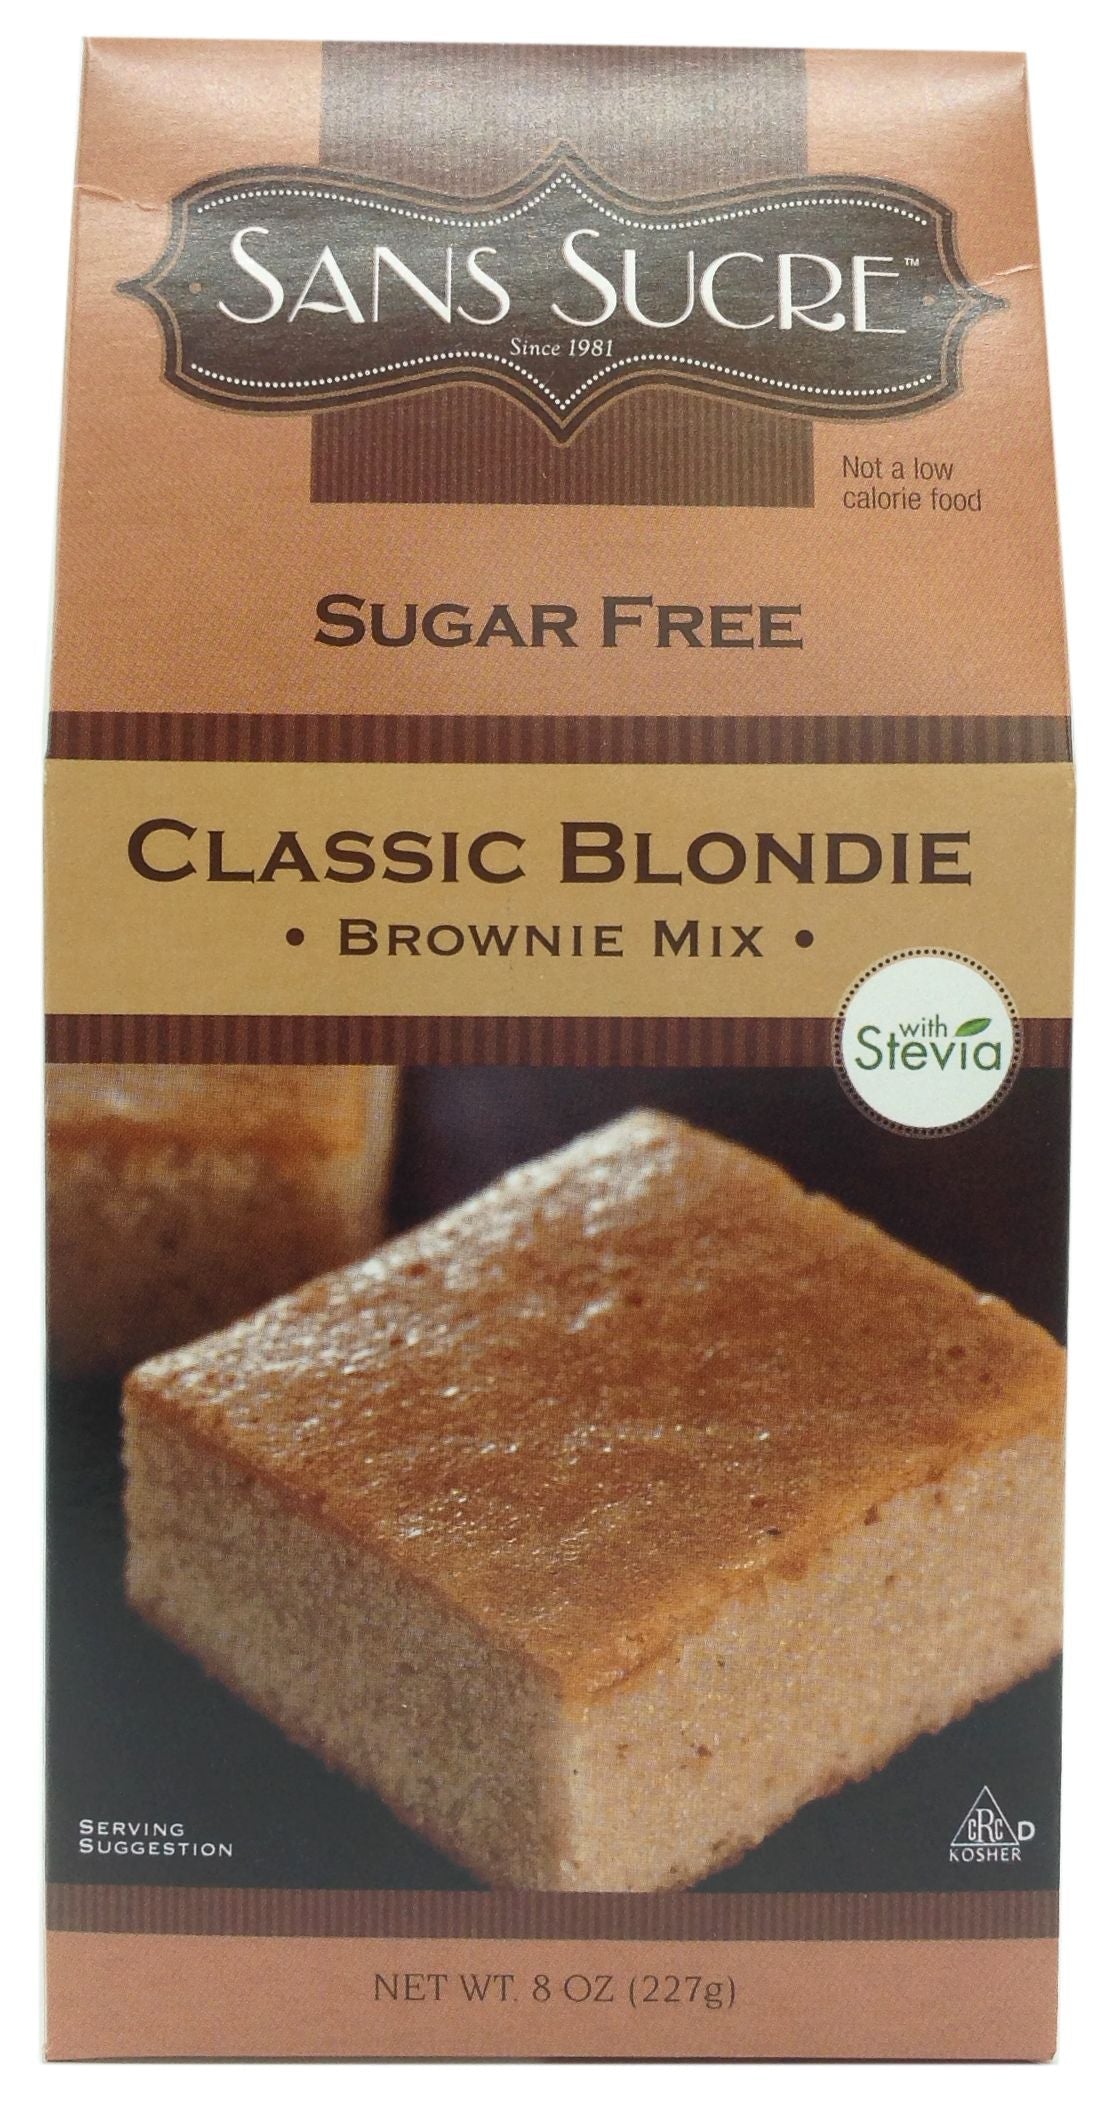 #Flavor_Classic Blondie, Sugar Free #Size_8 oz.